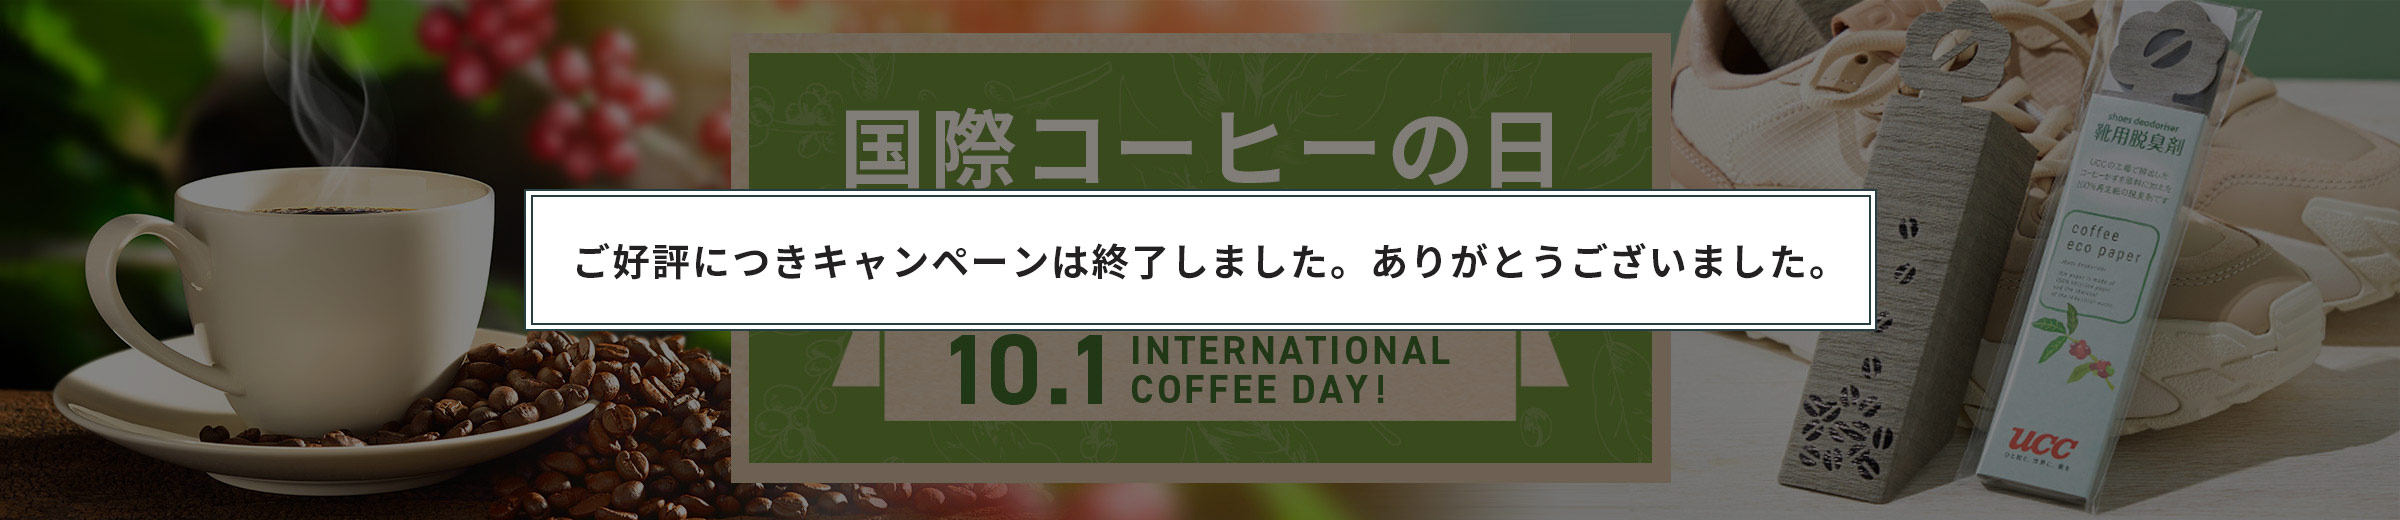 INTERNATIONAL COFFEE DAY! 国際コーヒーの日キャンペーン